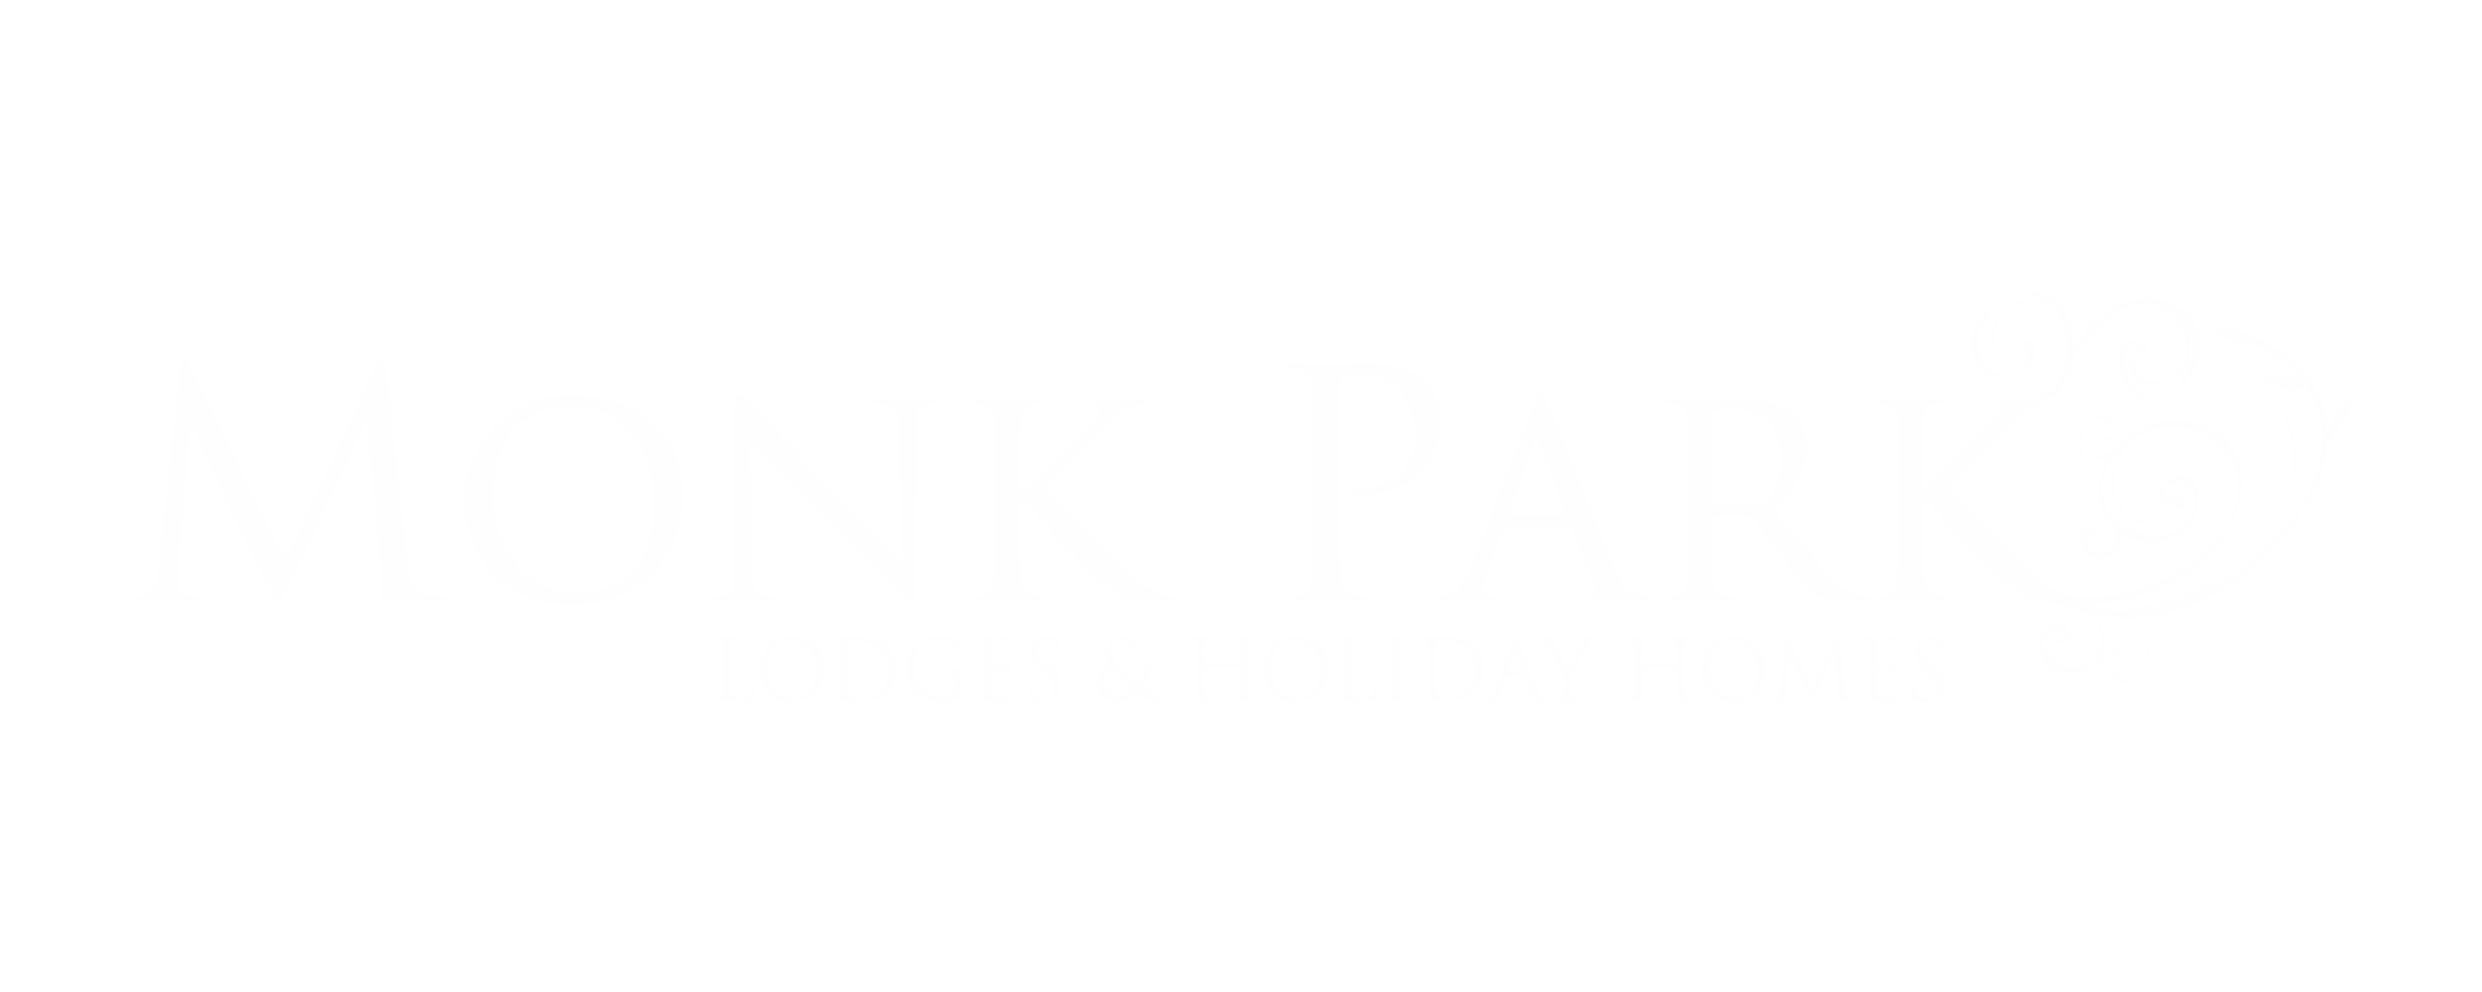 Monk Park holiday homes near Thirsk Logo